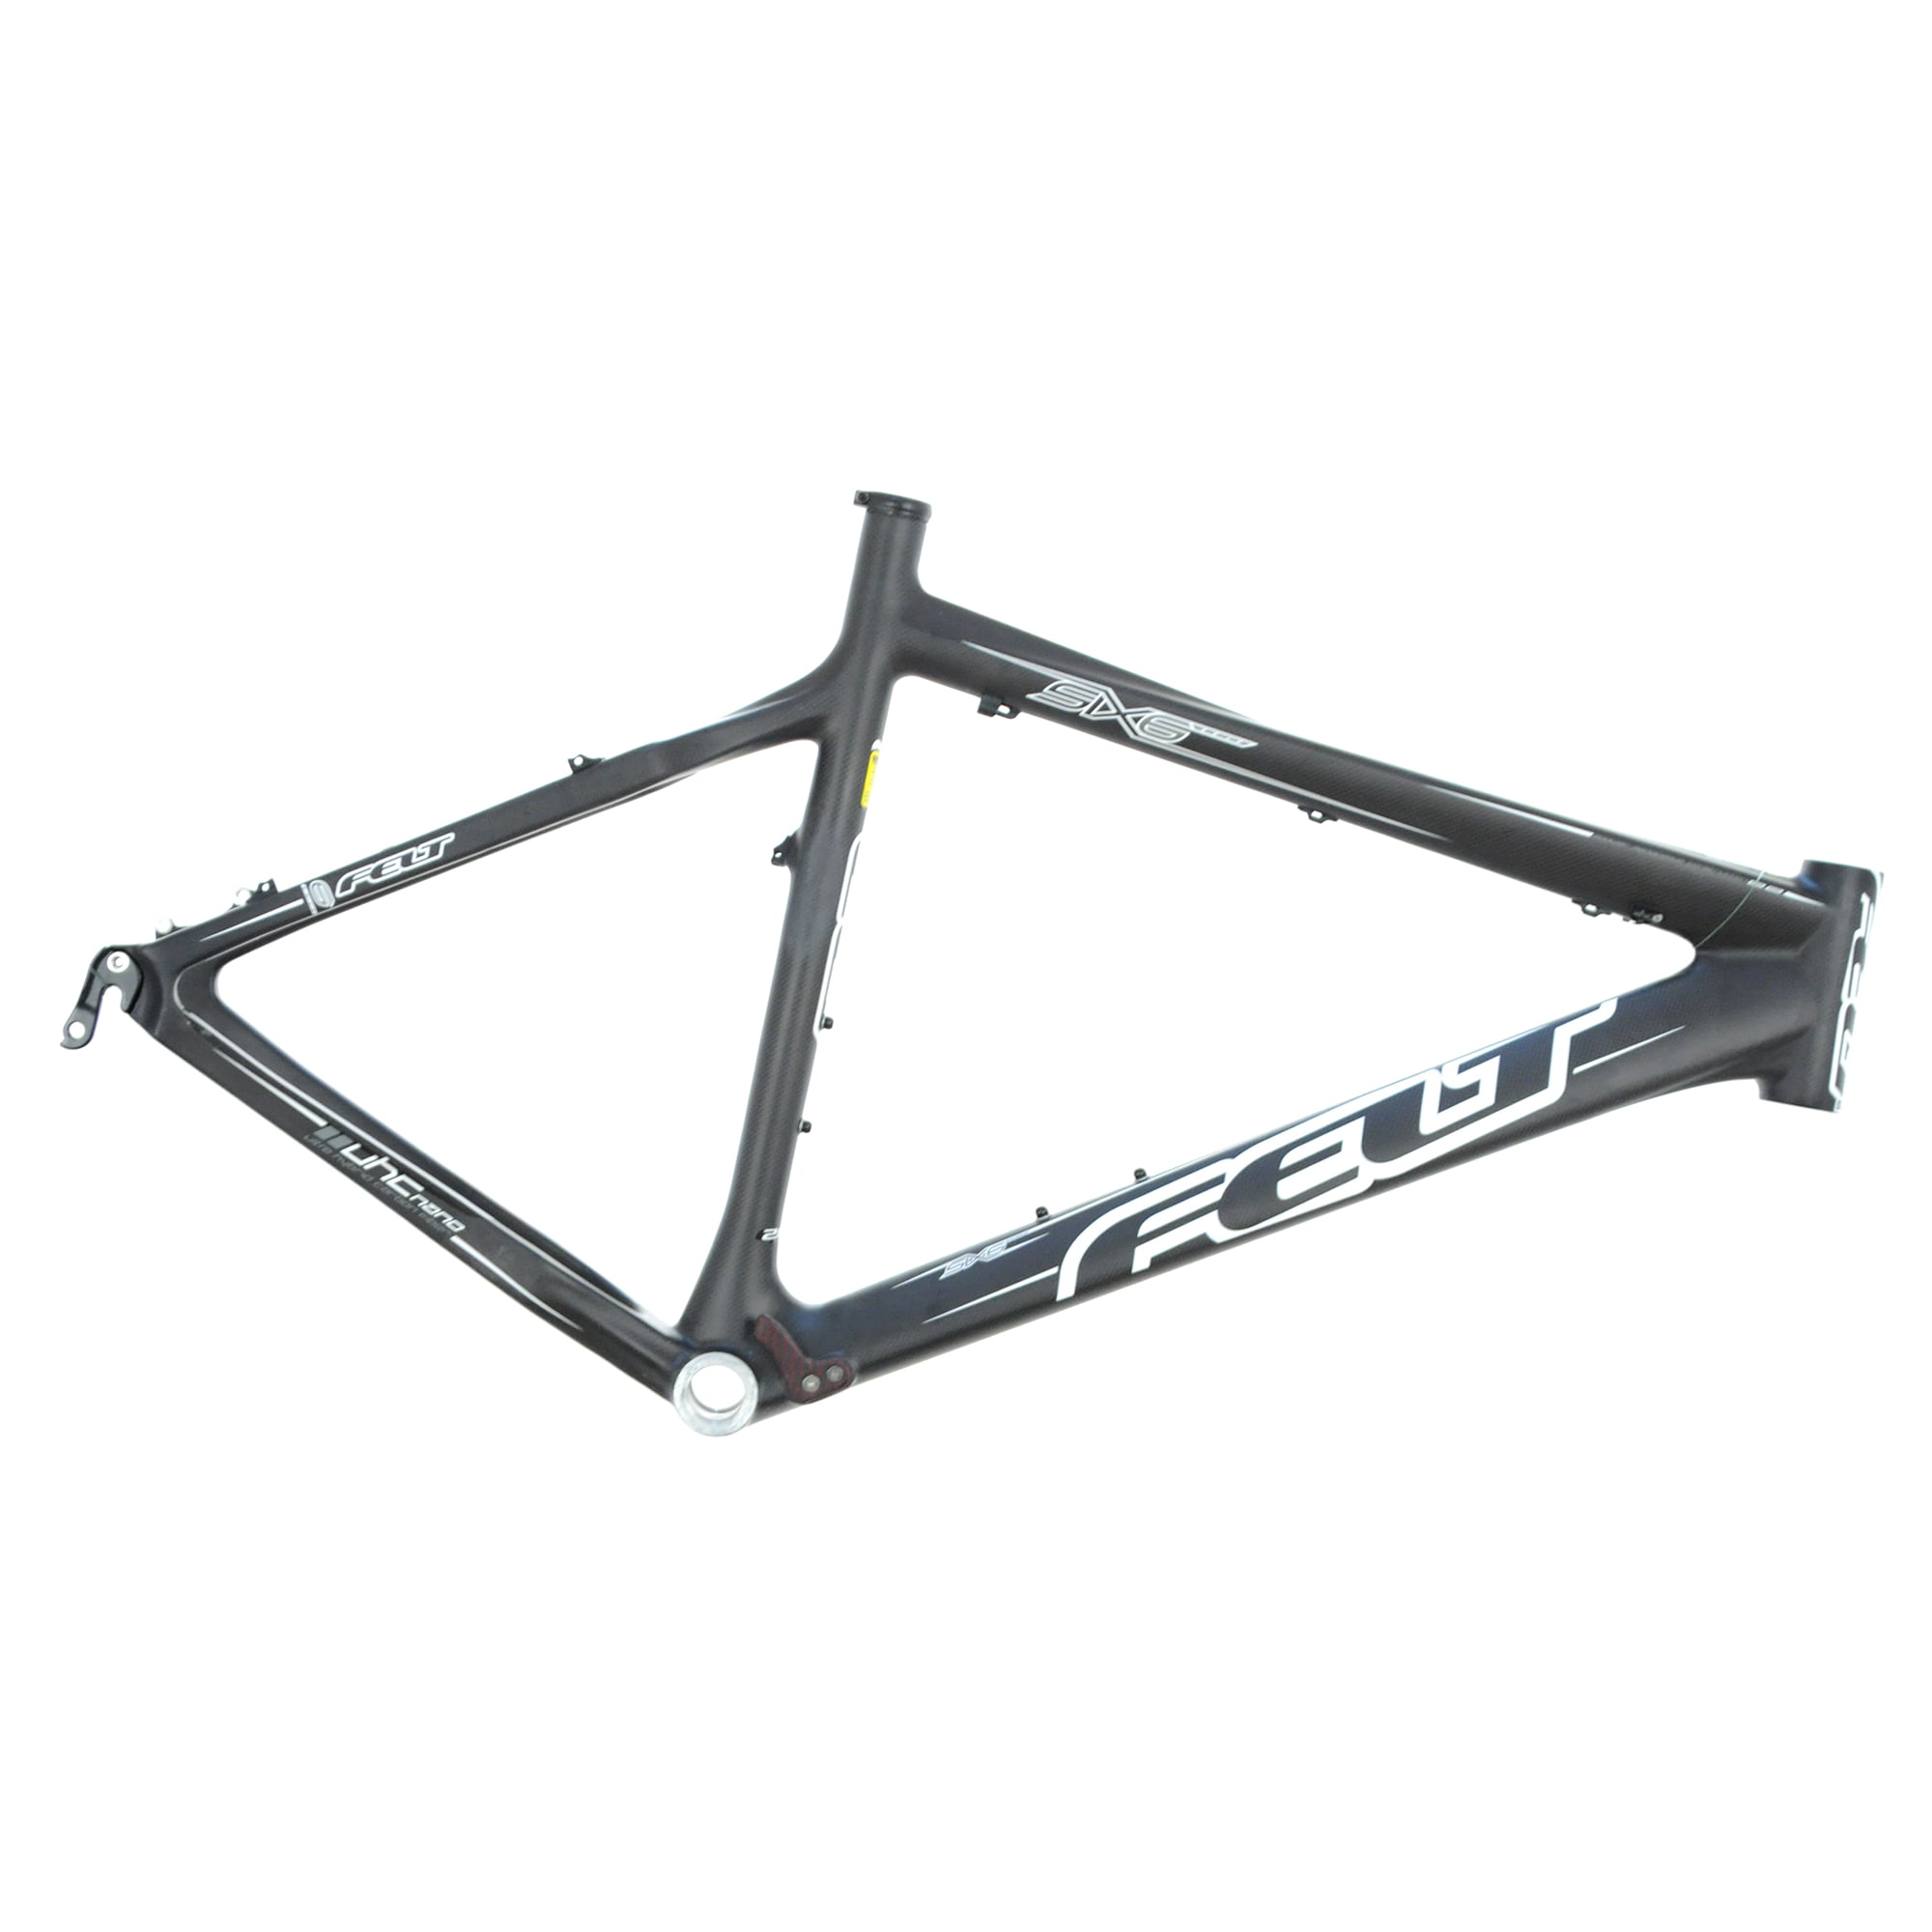 FELT SIX Race 26" MTB Mountain Bike Aluminum/Carbon Frame // 21" X-Large 